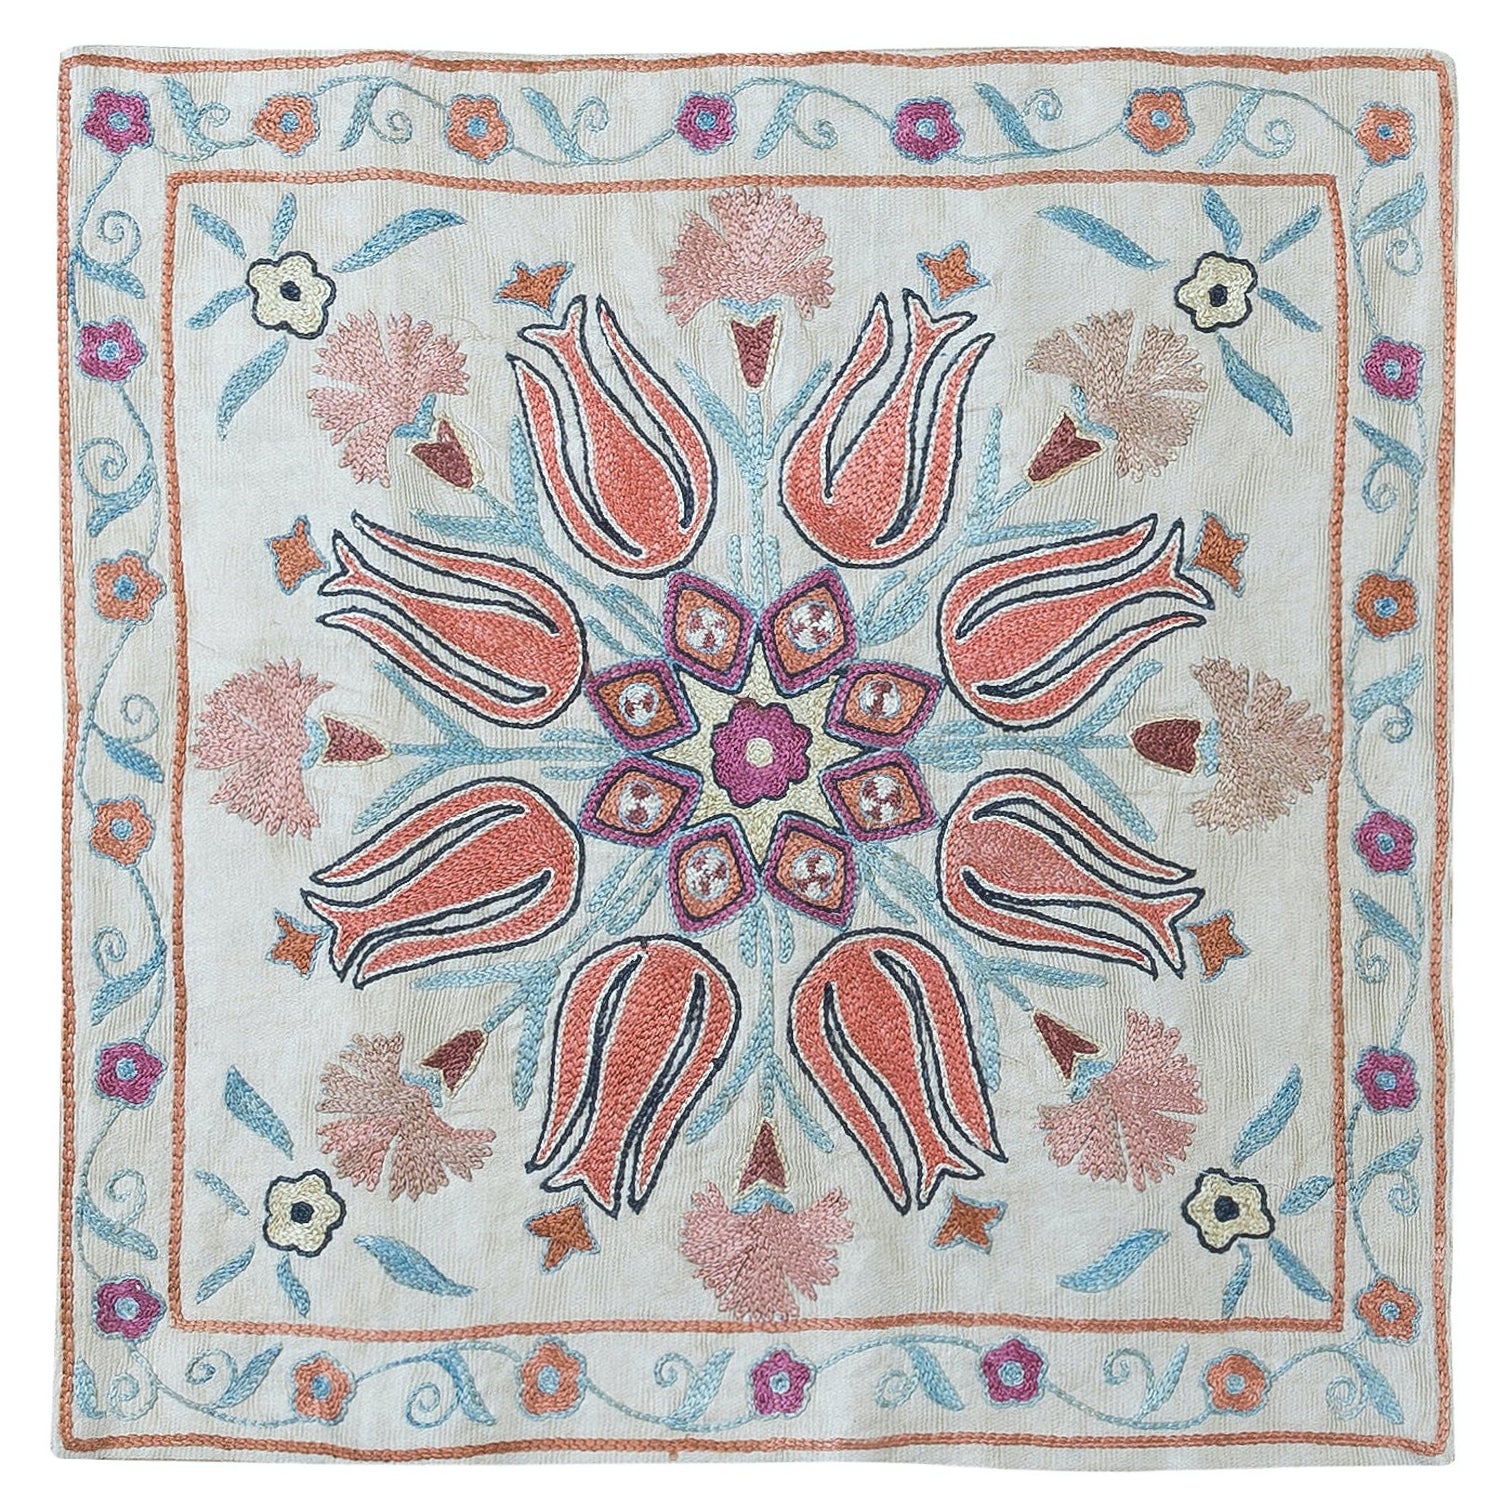 Uzbek Suzani Throw Pillow, 100% Silk Hand Embroidery Cushion Cover. 19"x19"